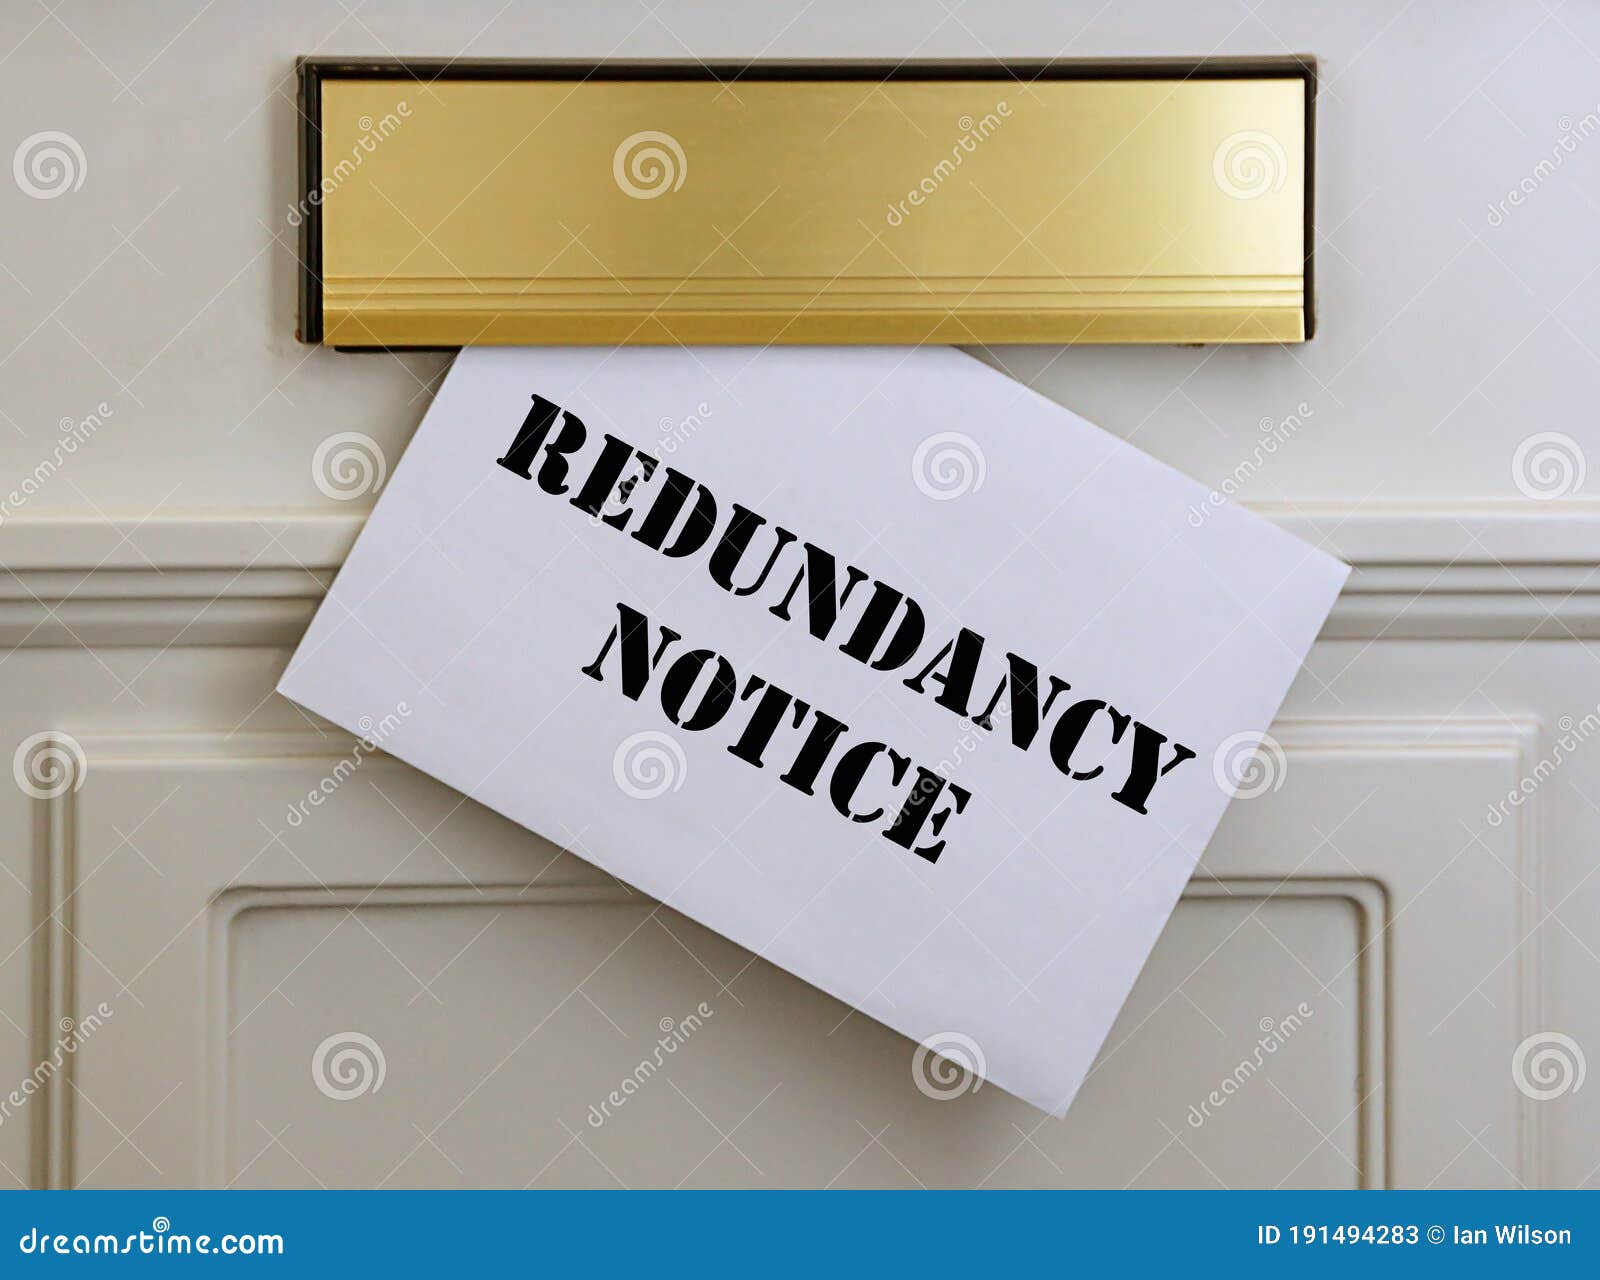 redundancy notice